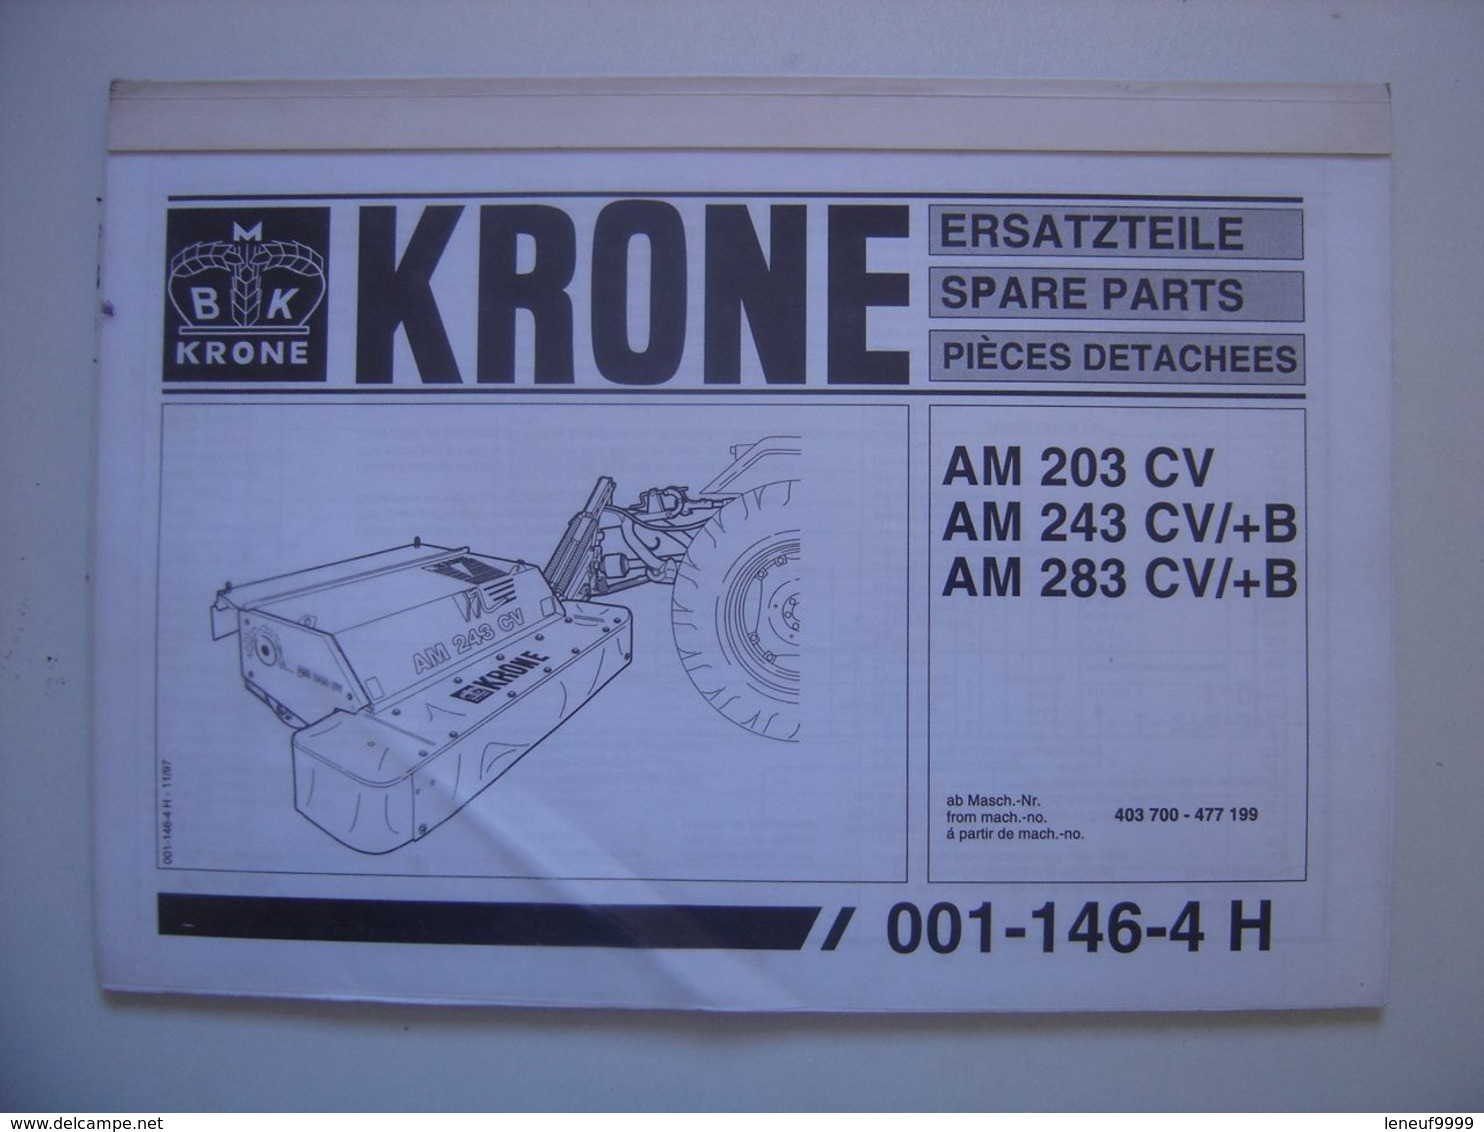 Manuel KRONE Materiel Agricole AM 243 CV Ersatzteile Spare Parts Pieces Detachee - Trattori